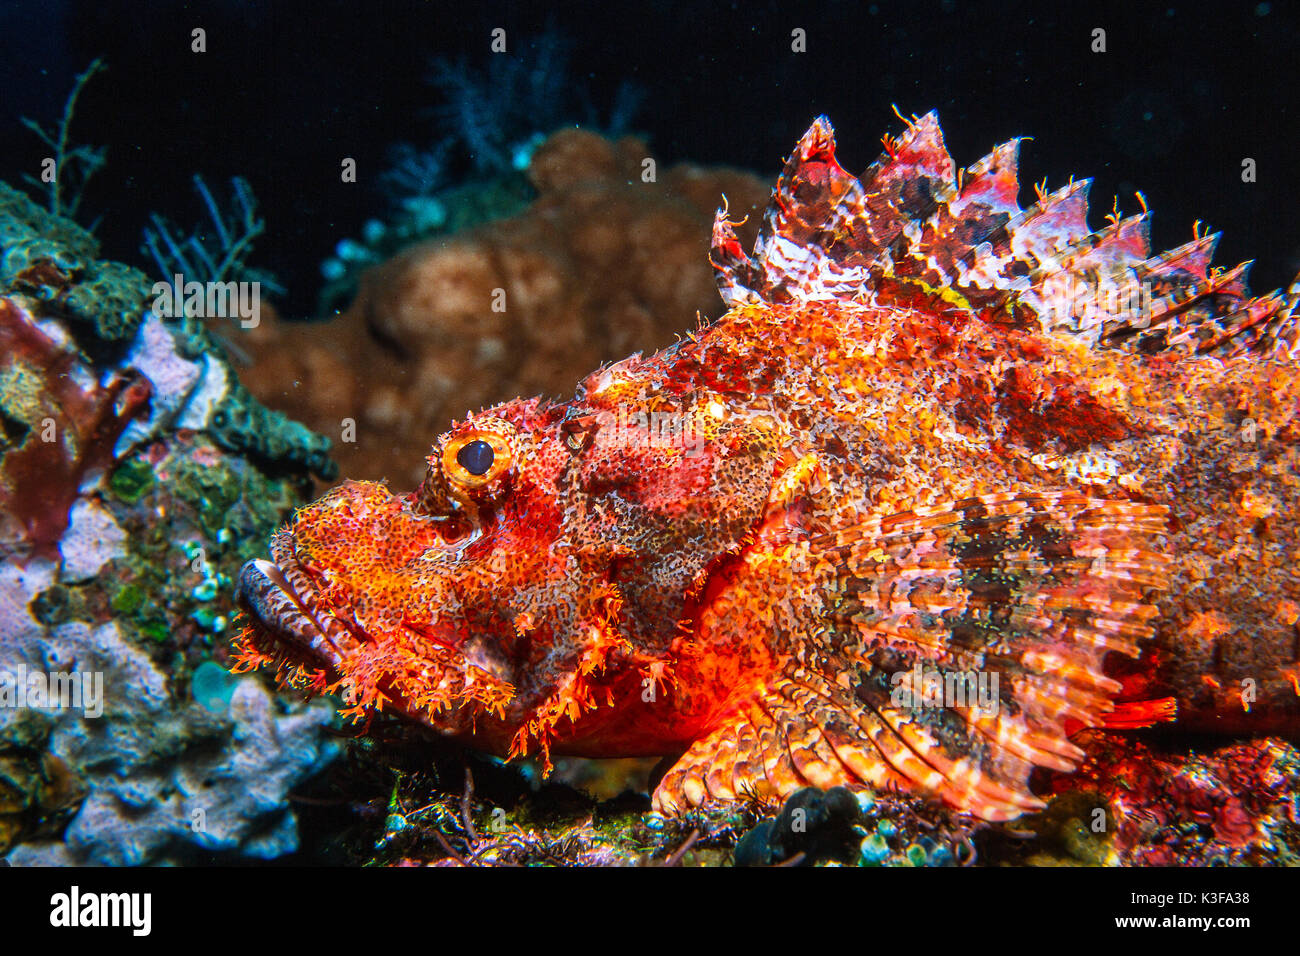 Bearded scorpion fish (Scorpaenopsis barbata) Stock Photo